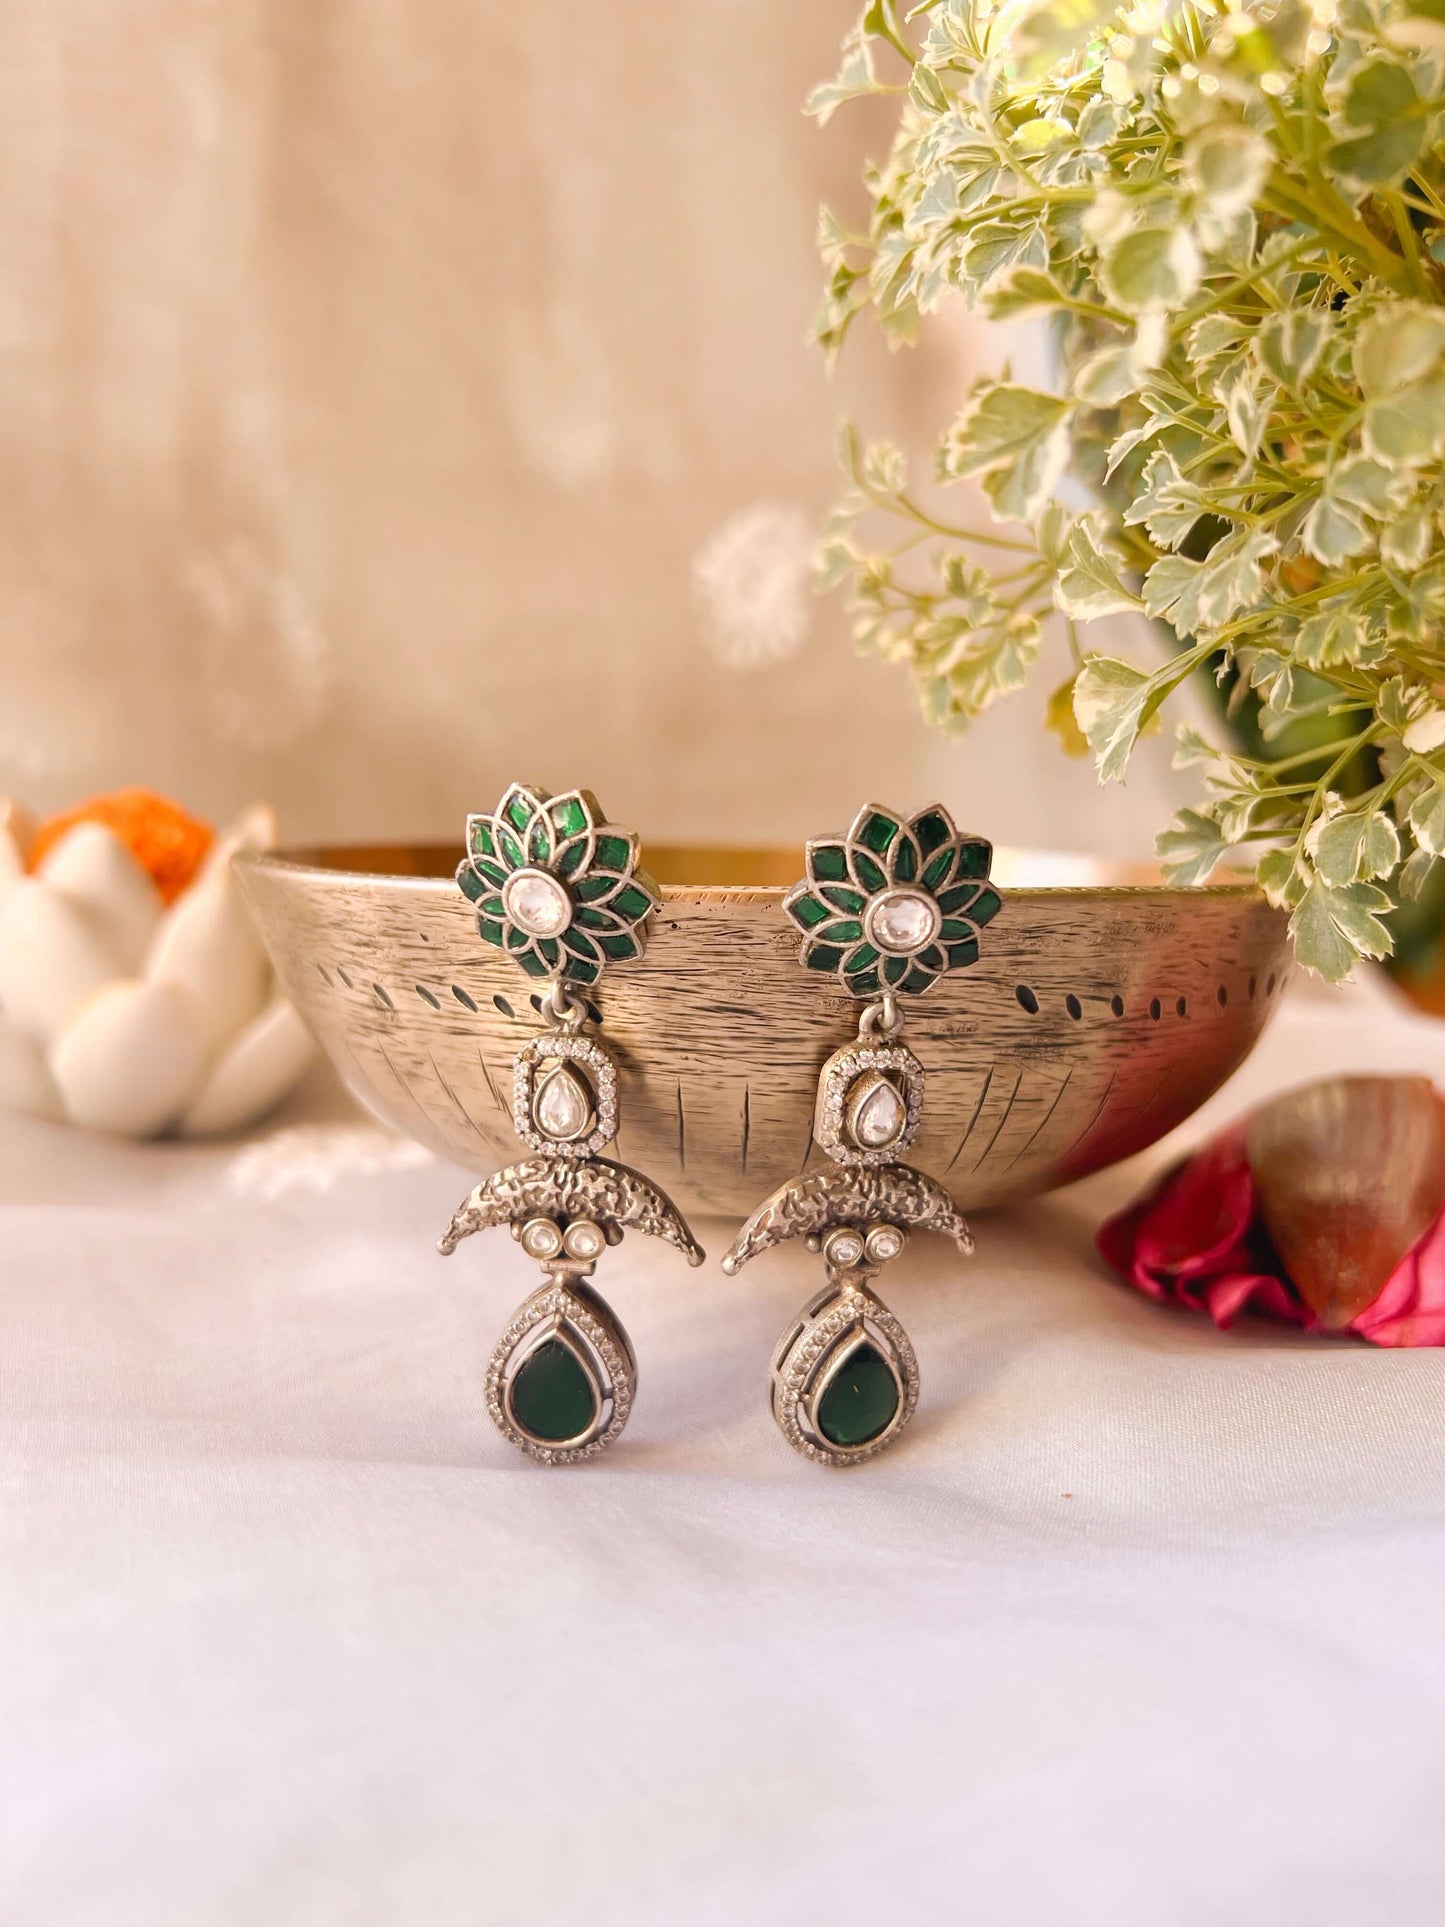 Nainika oxidised silver earring with emerald kundan stone